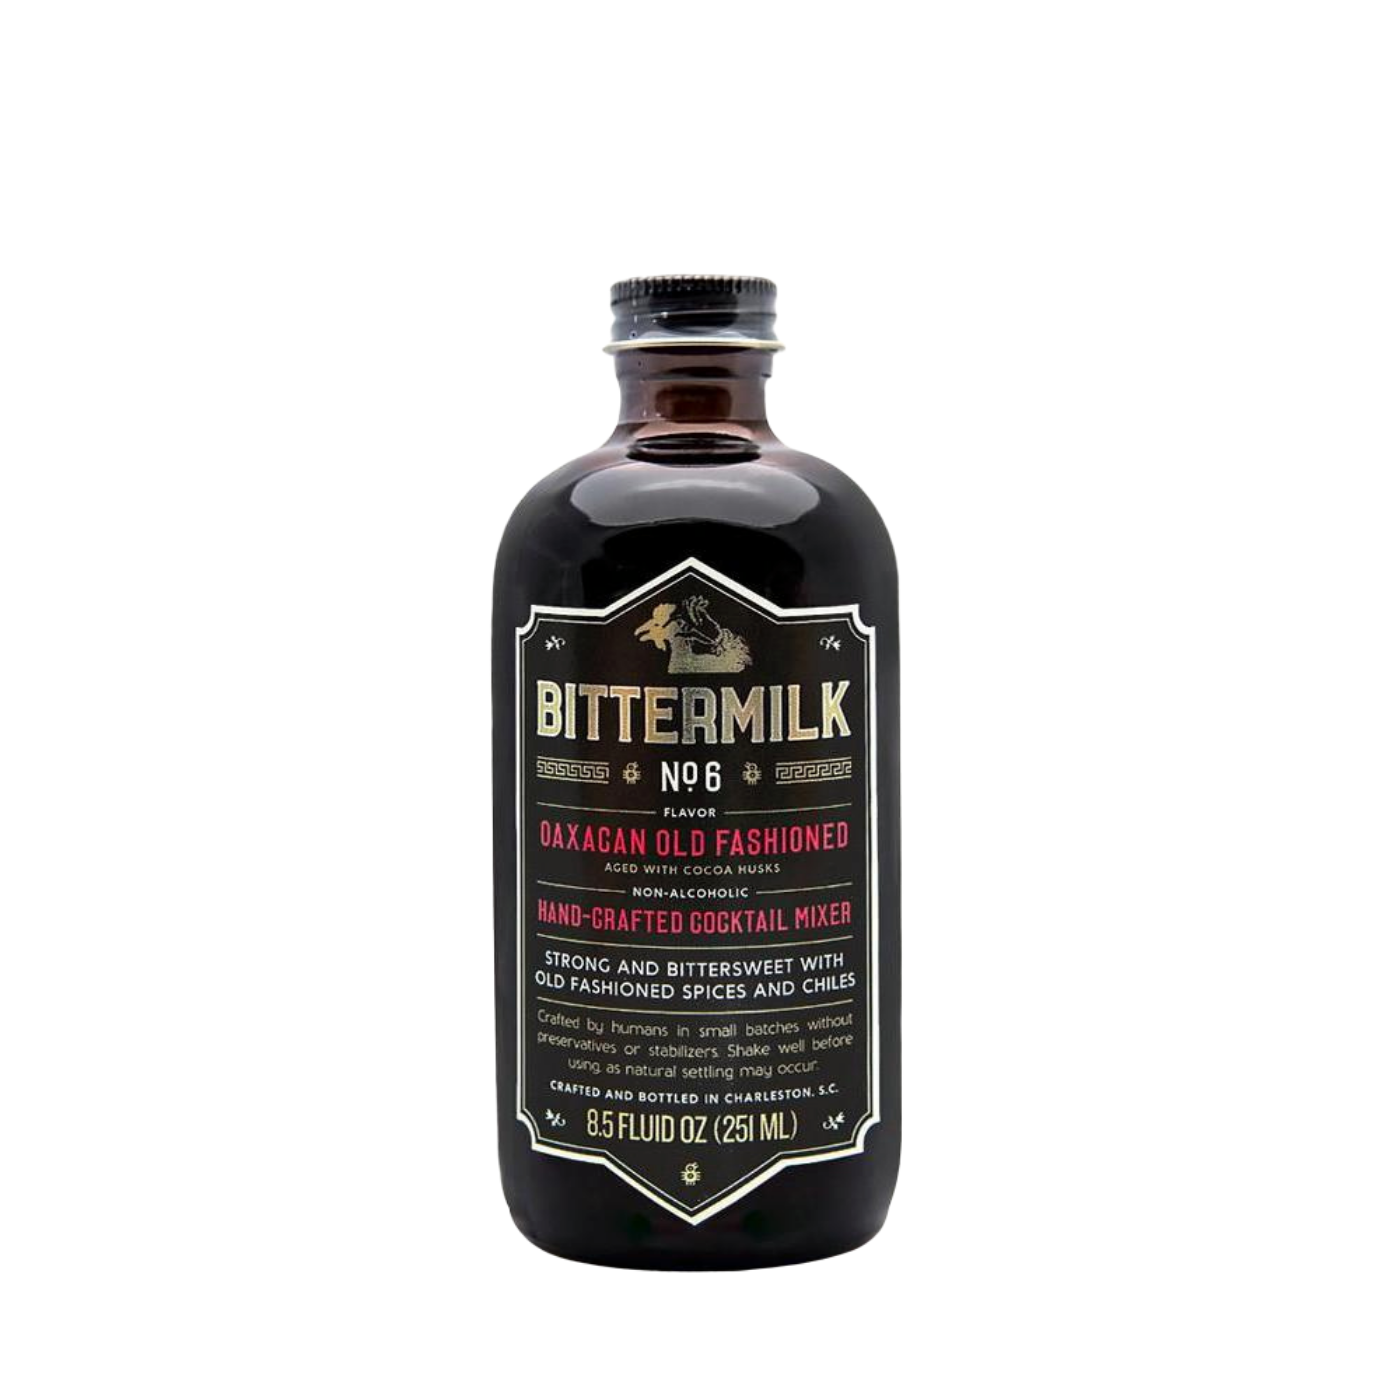 Bittermilk - Oaxacan Old Fashioned